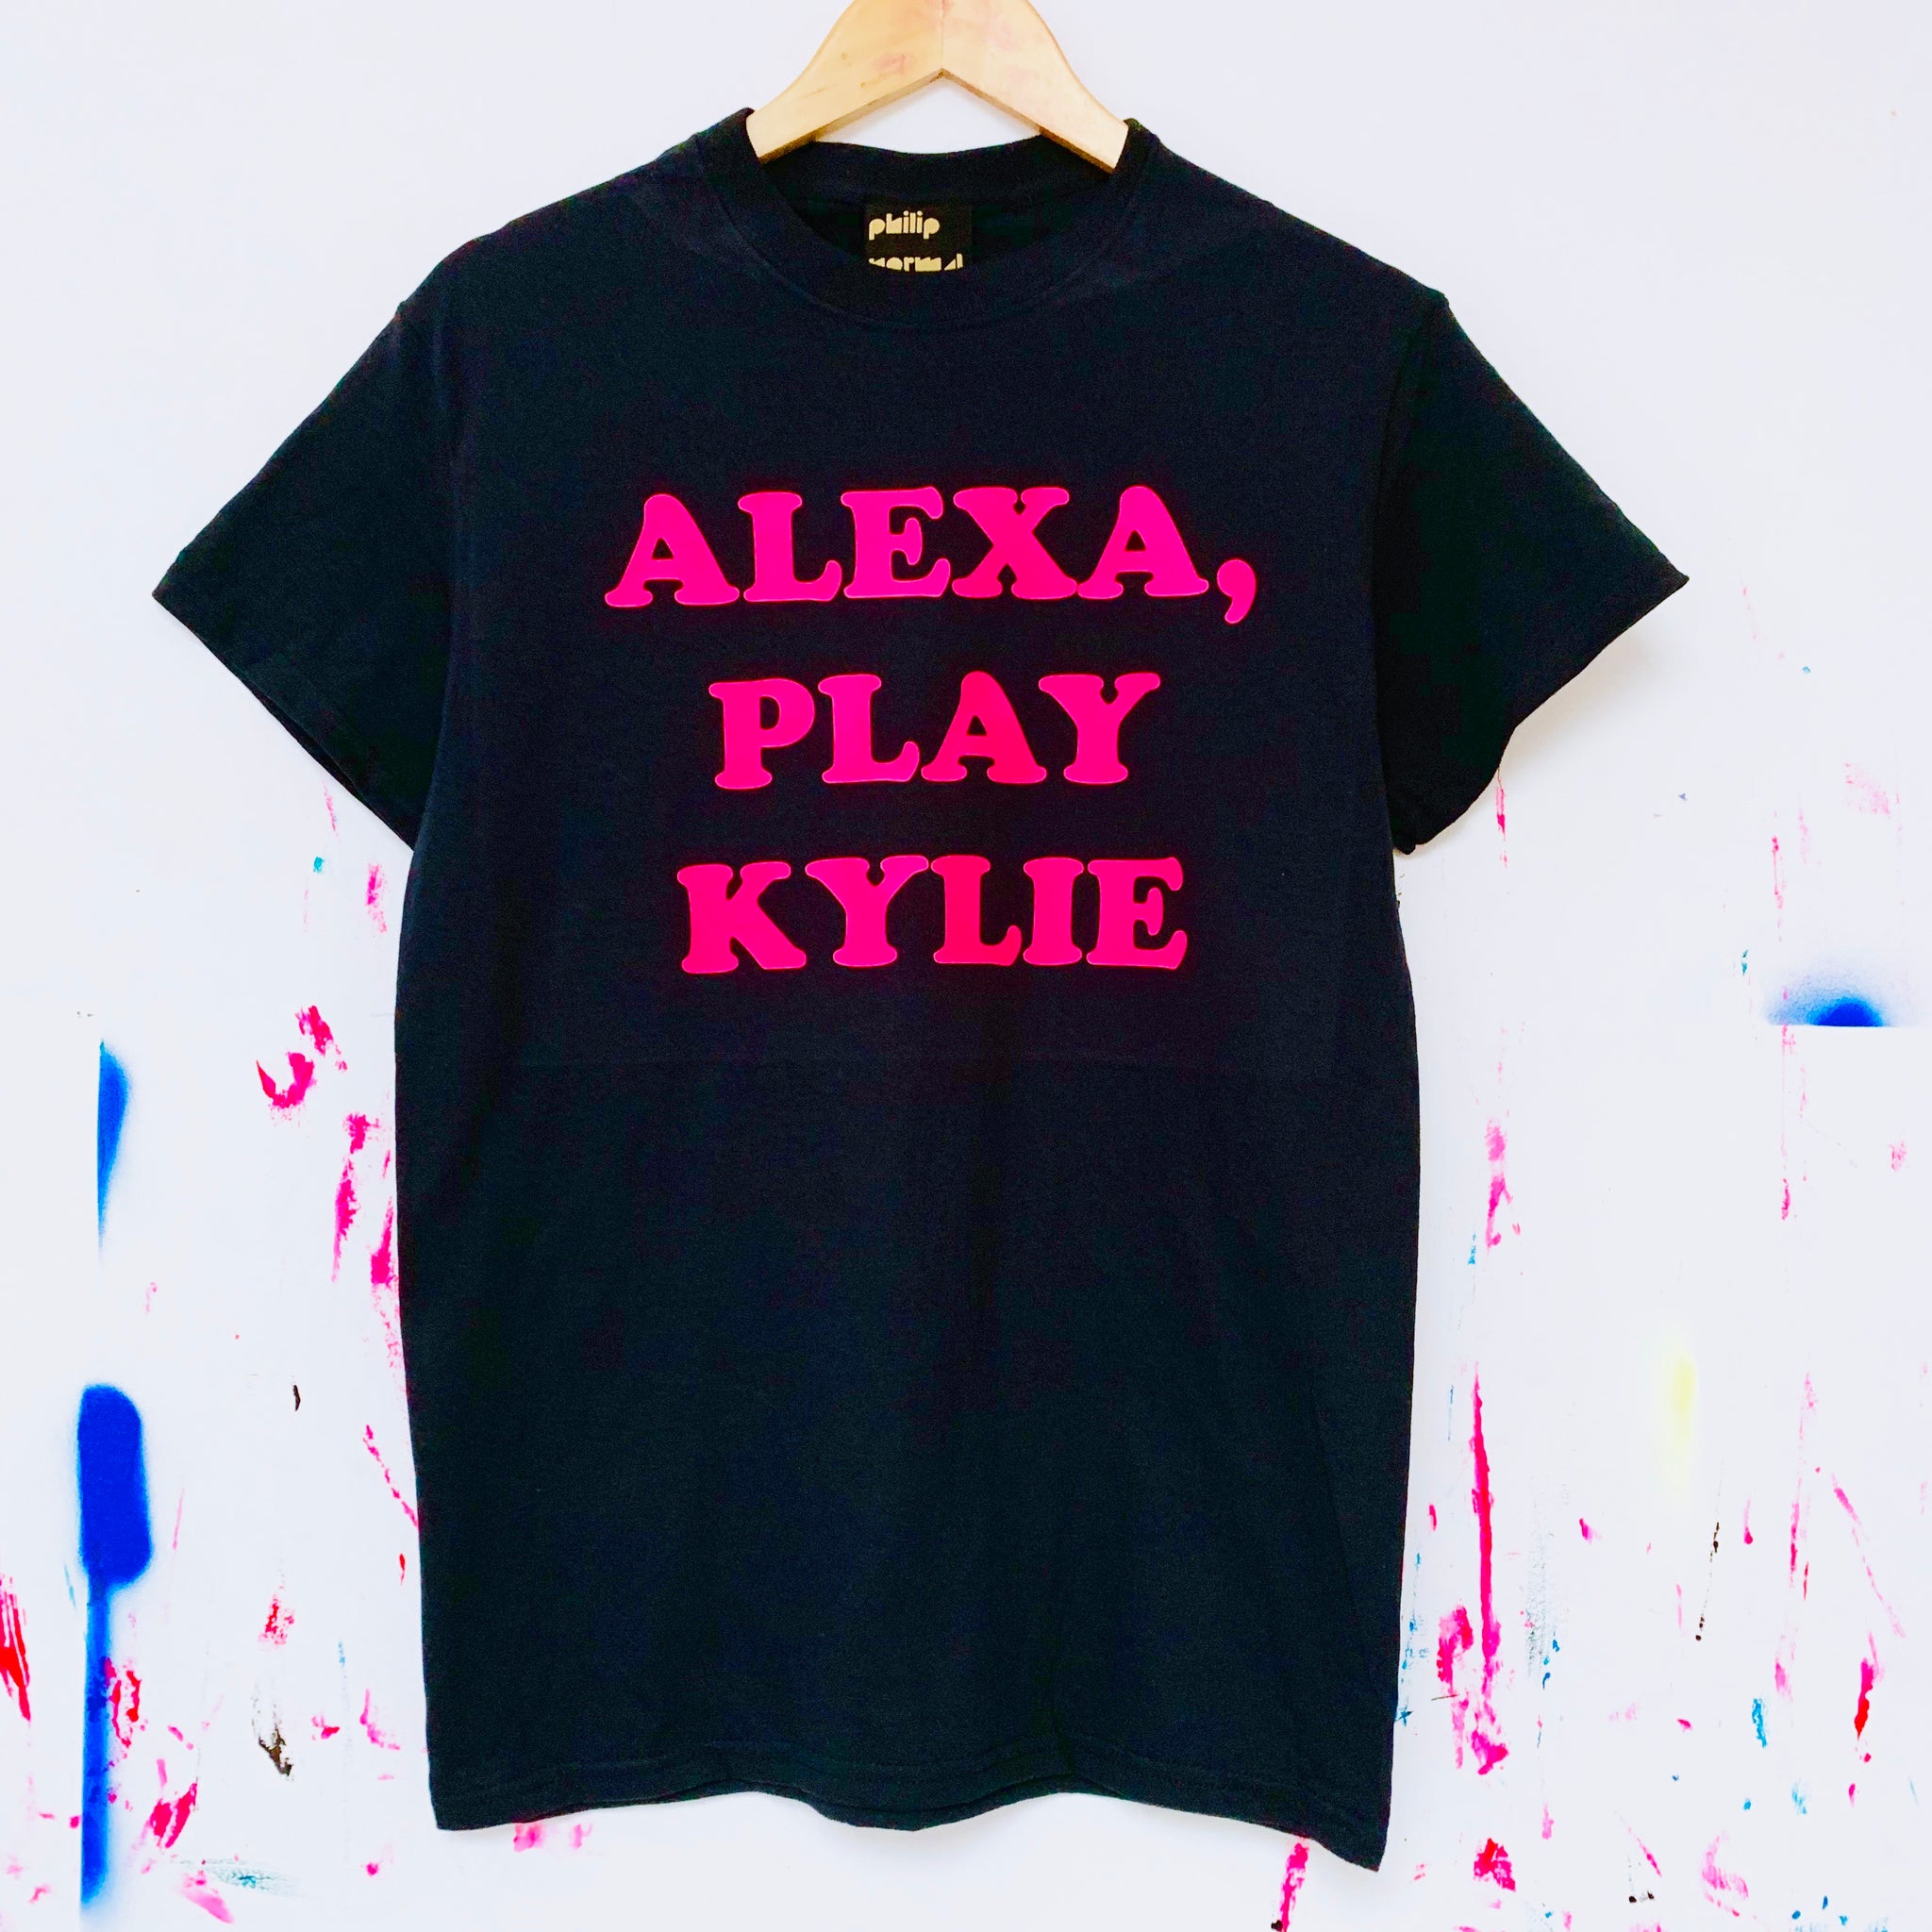 Alexa, Play Kylie T-Shirt